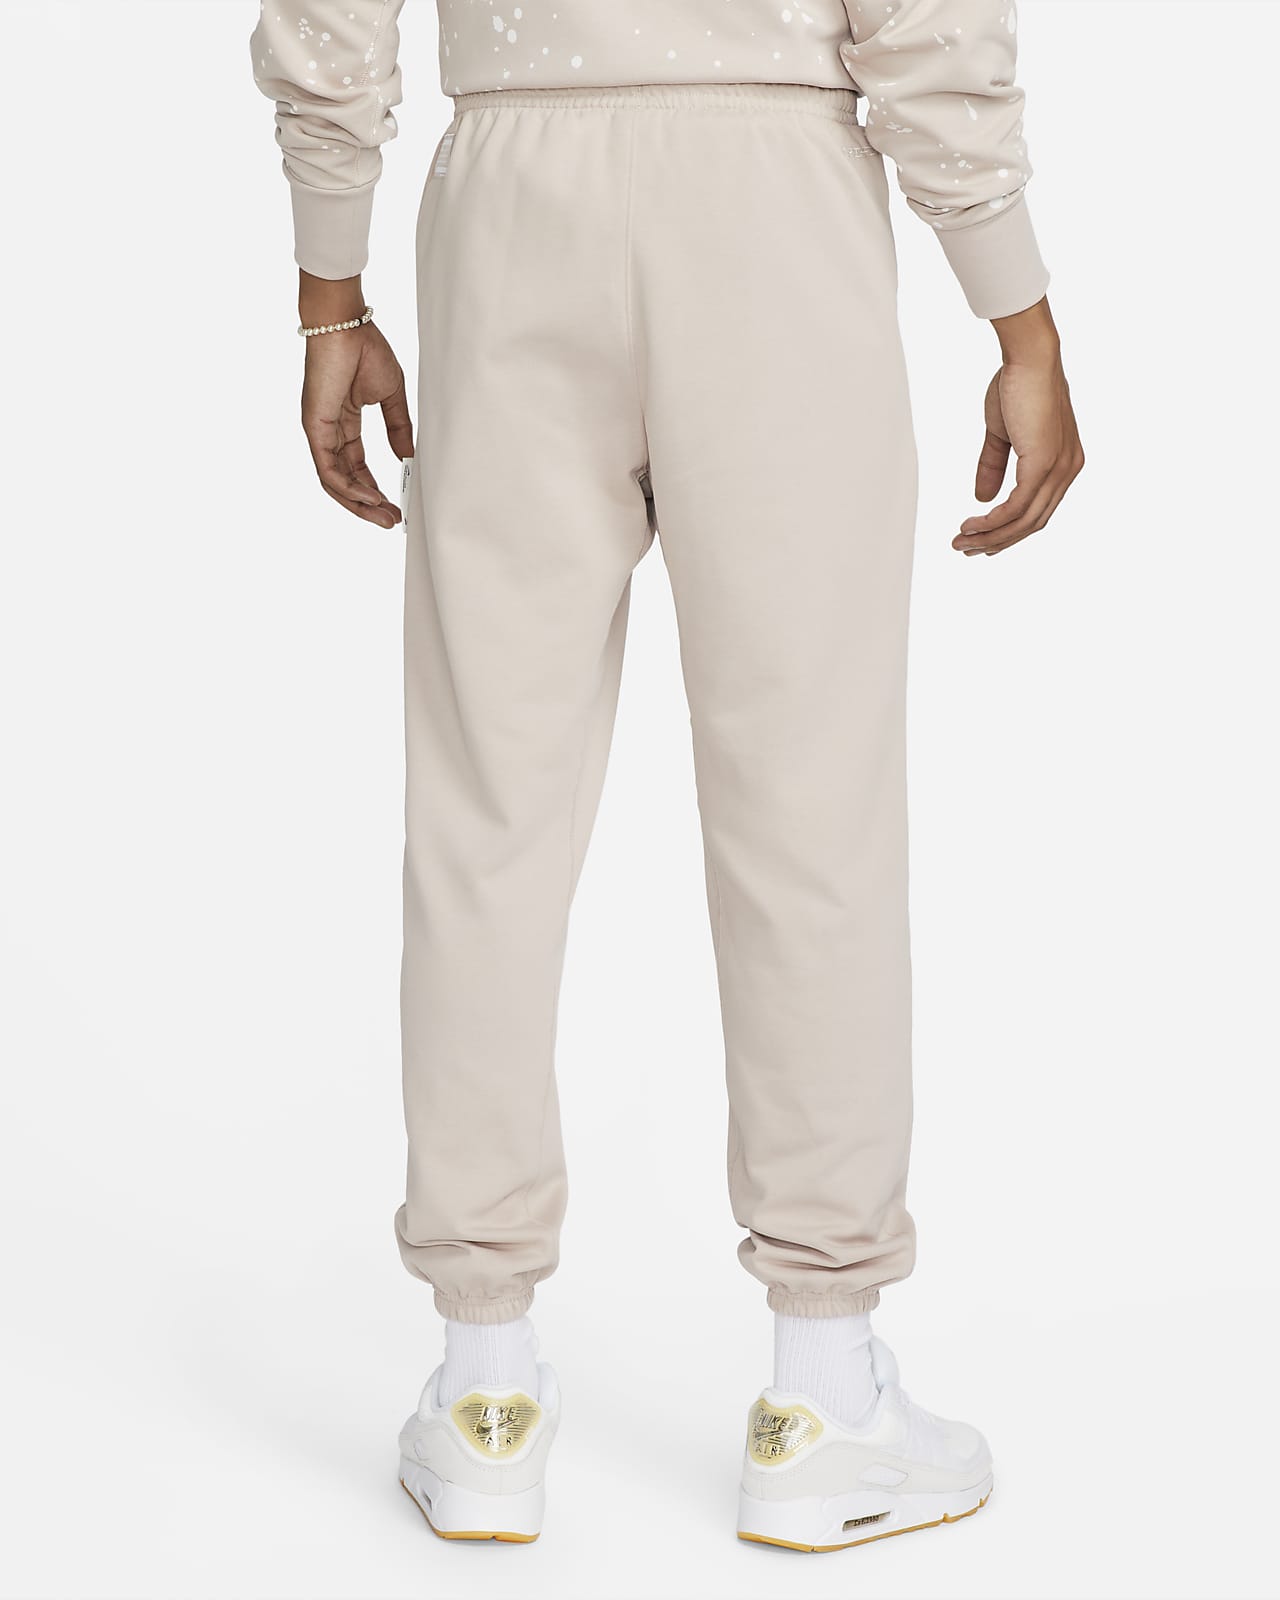 Nike Baseball Pants Men's Cream/Navy Used